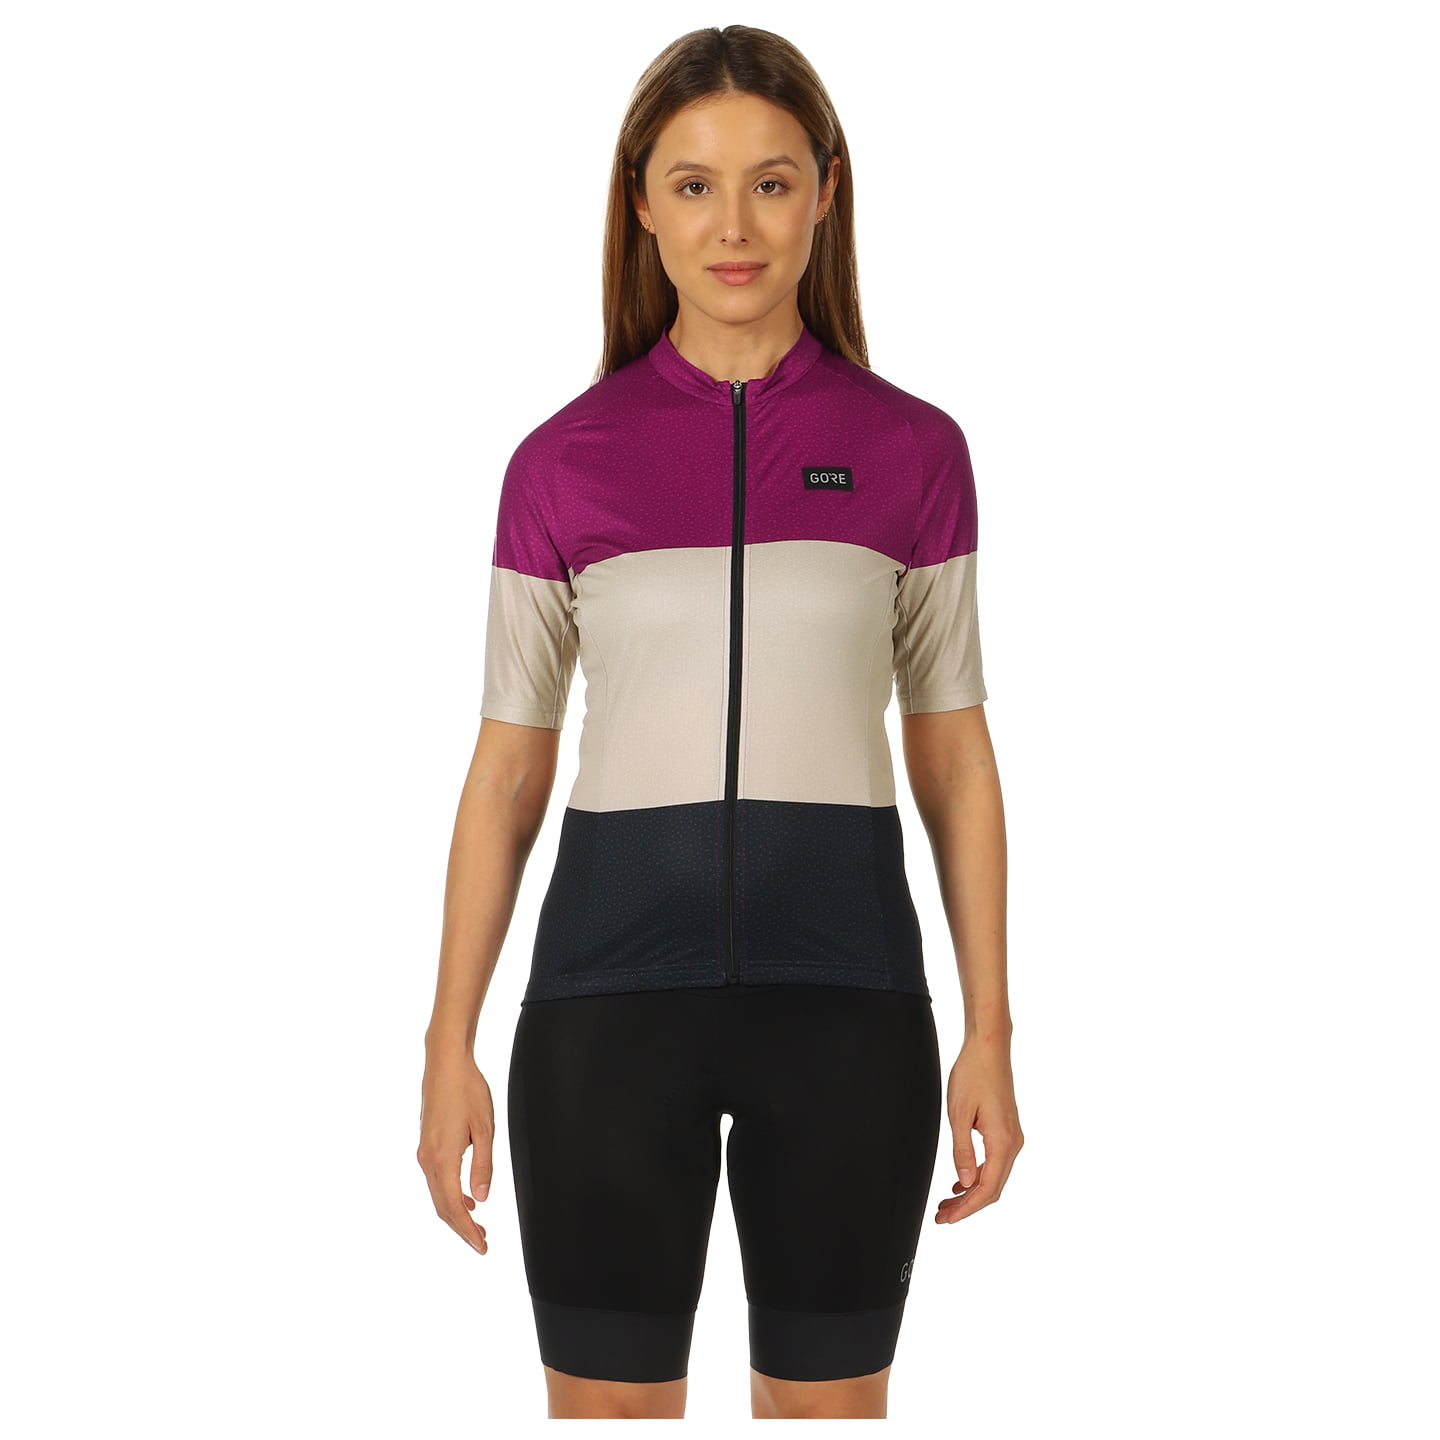 (cycling jersey + cycling shorts) Women’s Set (2 pieces), Cycling clothing